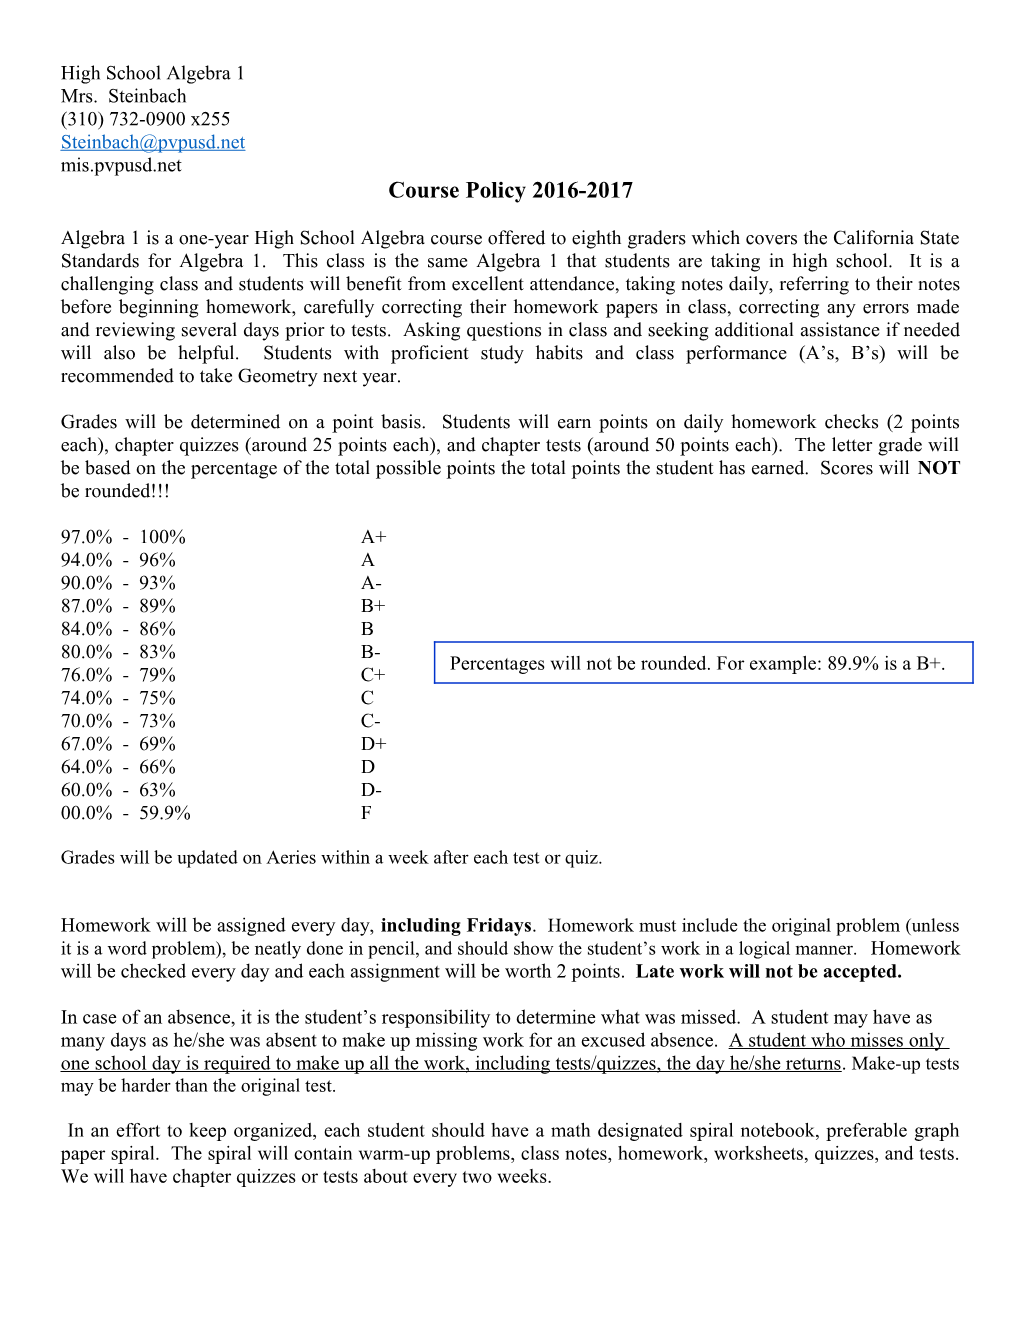 Algebra 1 Course Policy 2004-2005